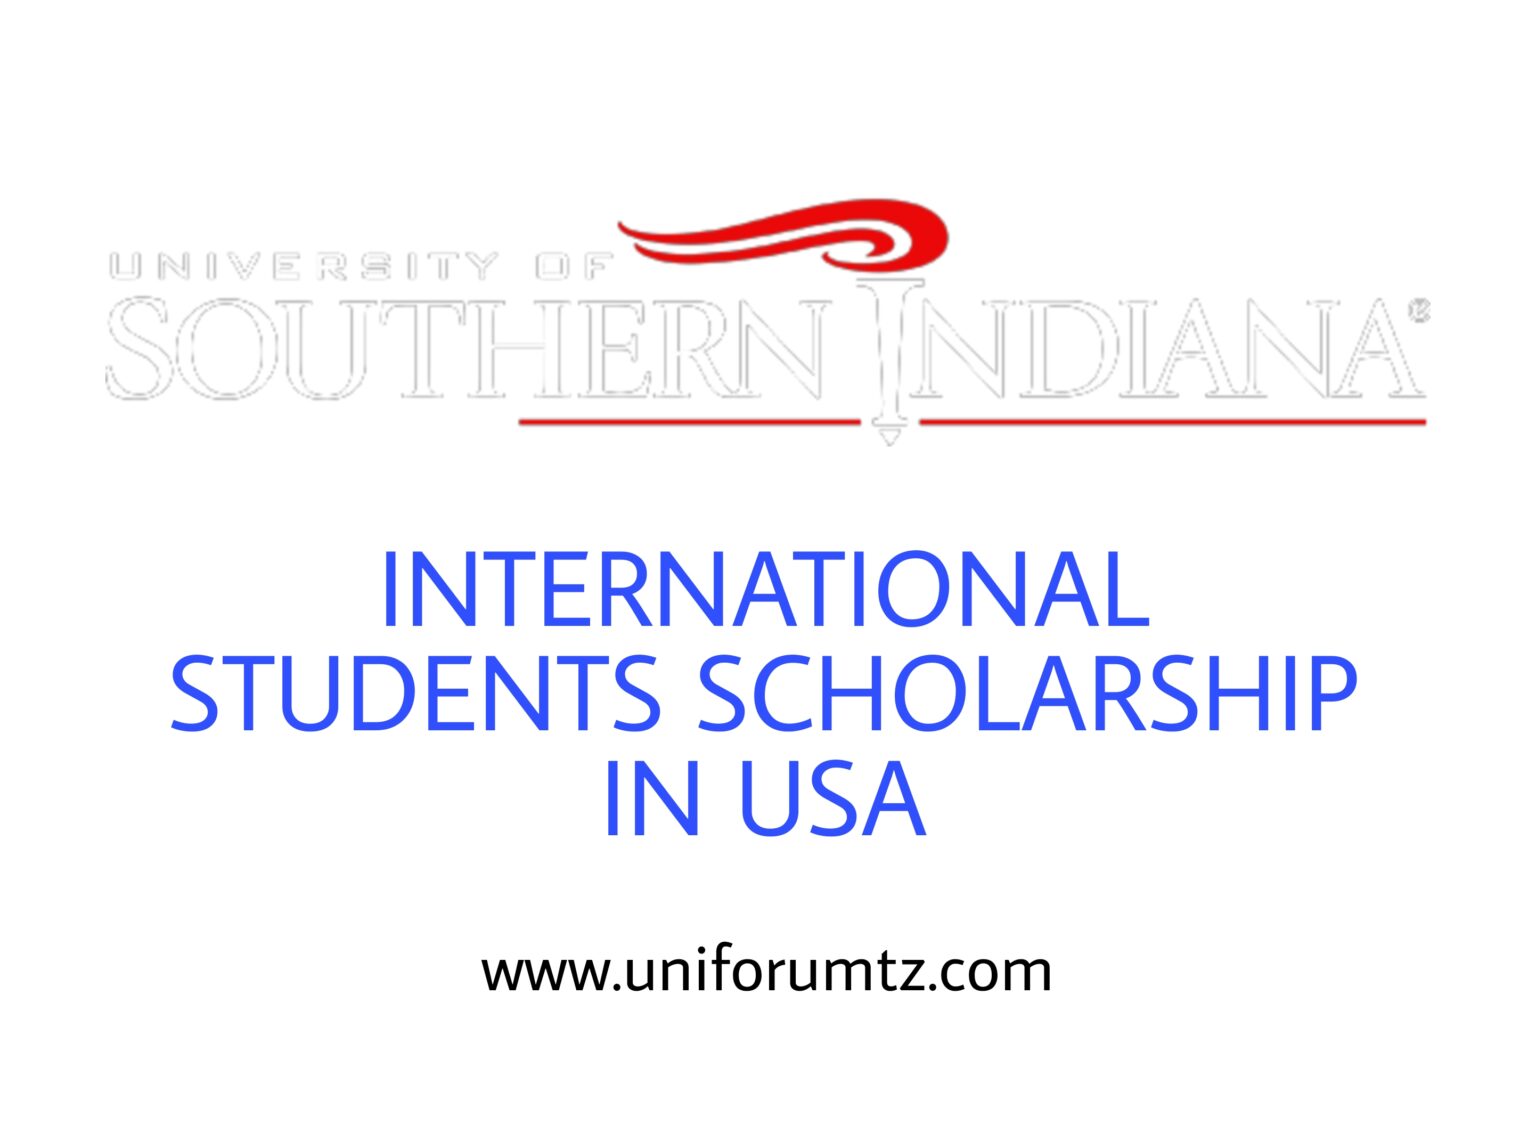 International Students Scholarships At University of Southern Indiana